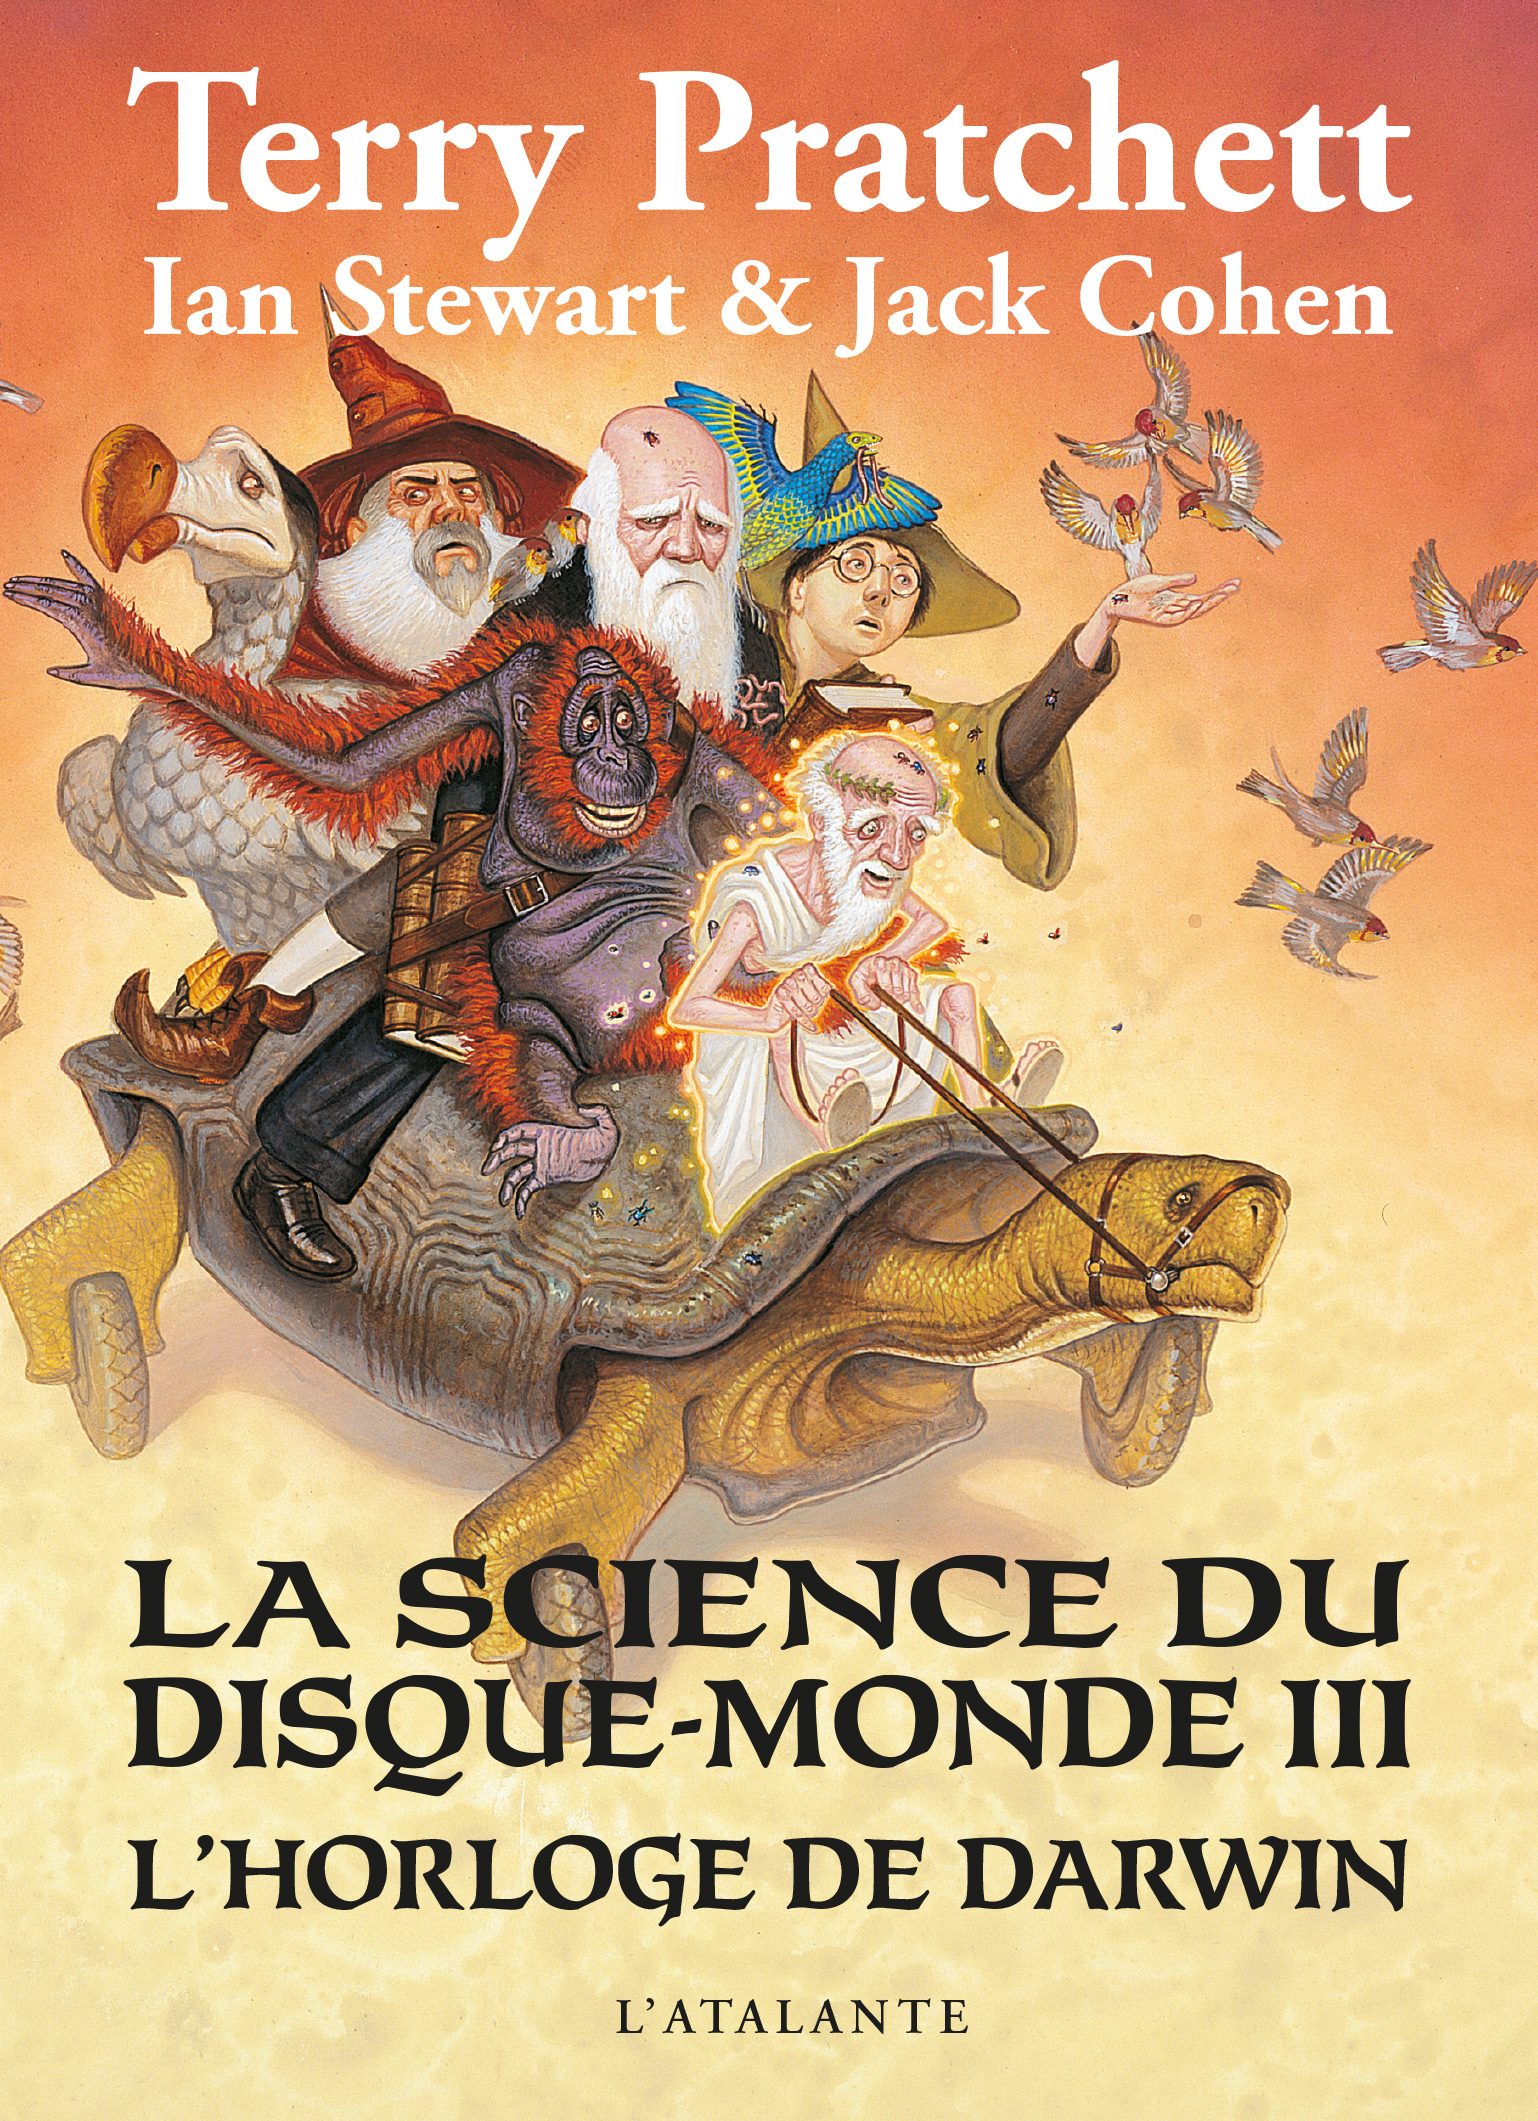 LA SCIENCE DU DISQUE MONDE III, L'HORLOGE DE DARWIN (9782841726684-front-cover)